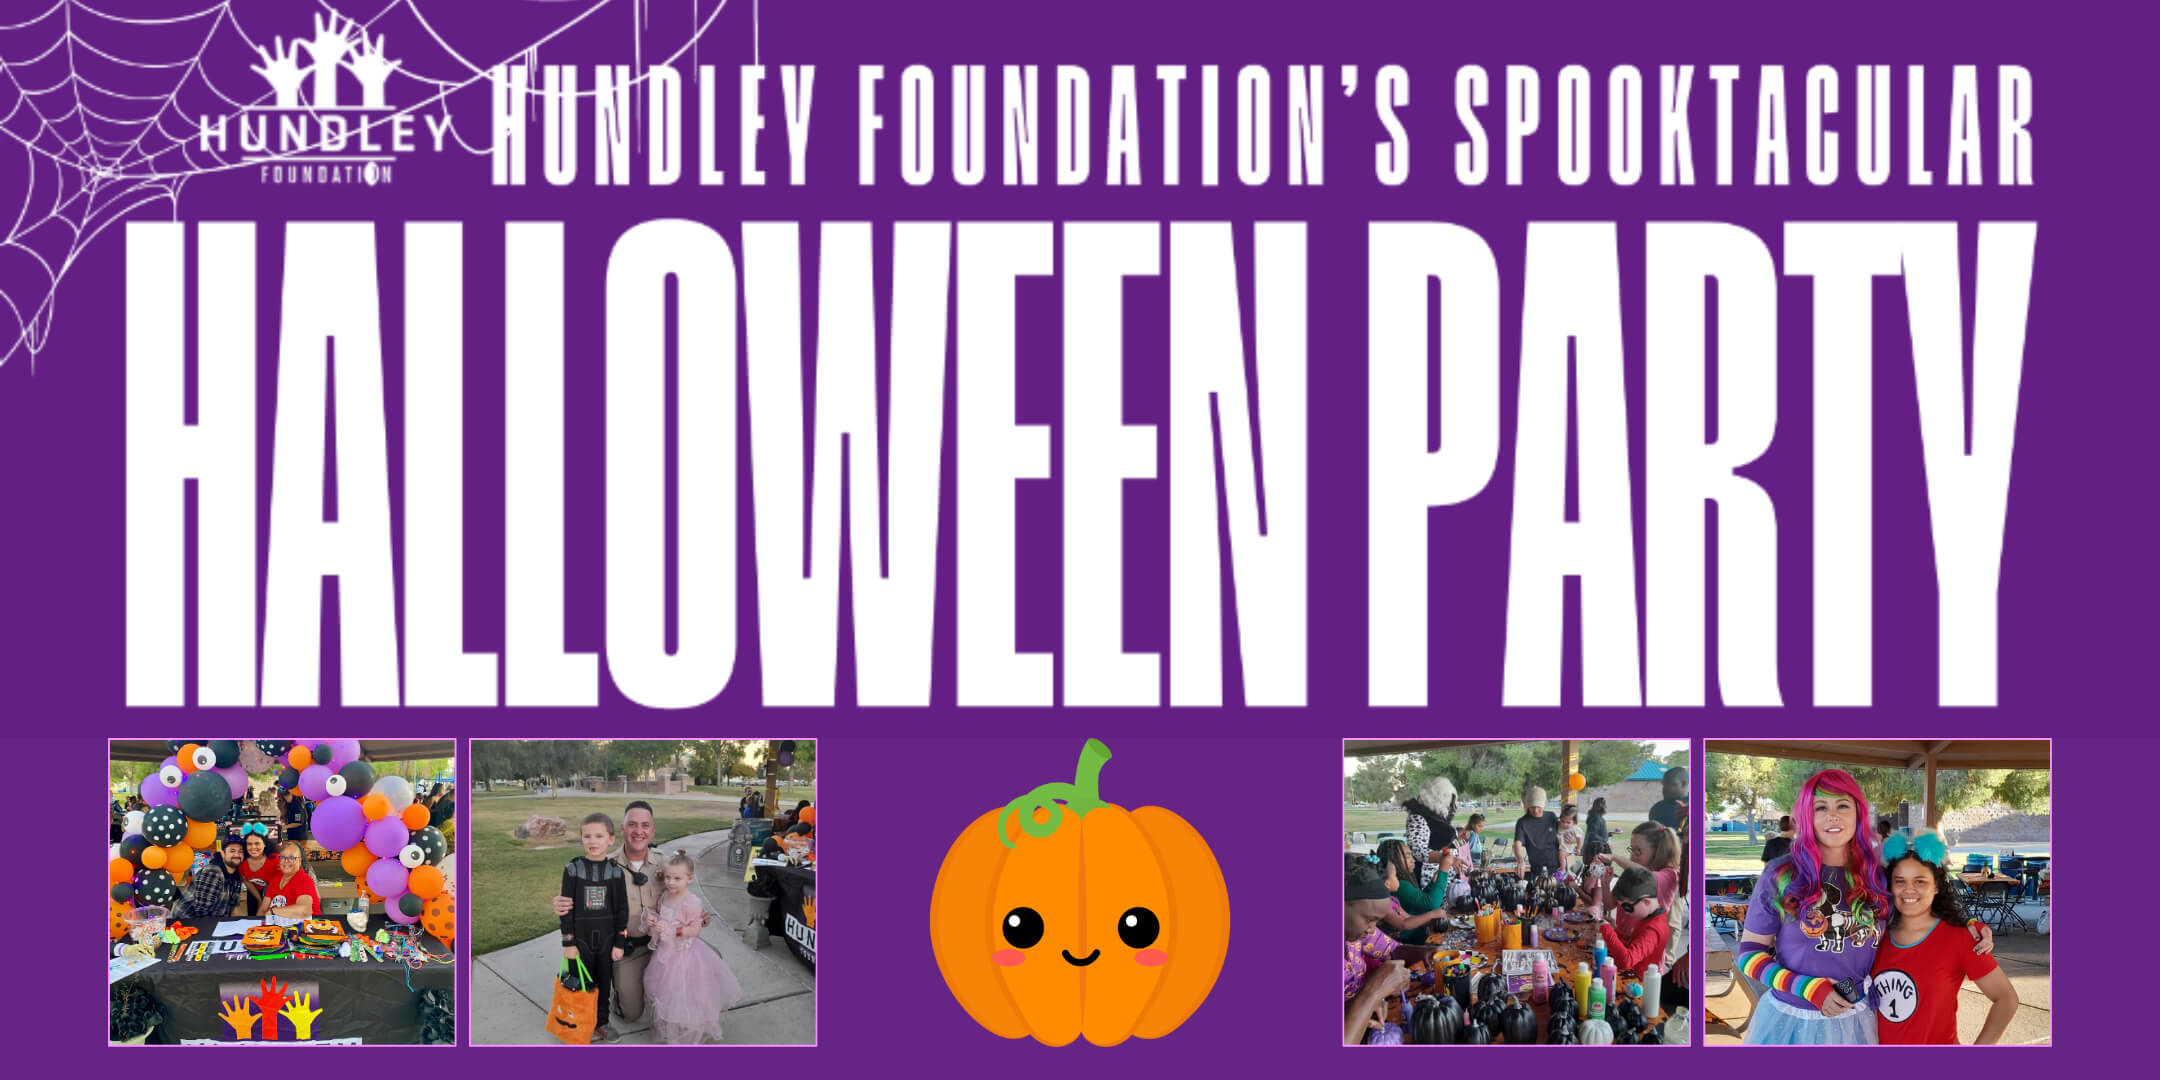 Hundley Foundation's Sooktacular Halloween Party